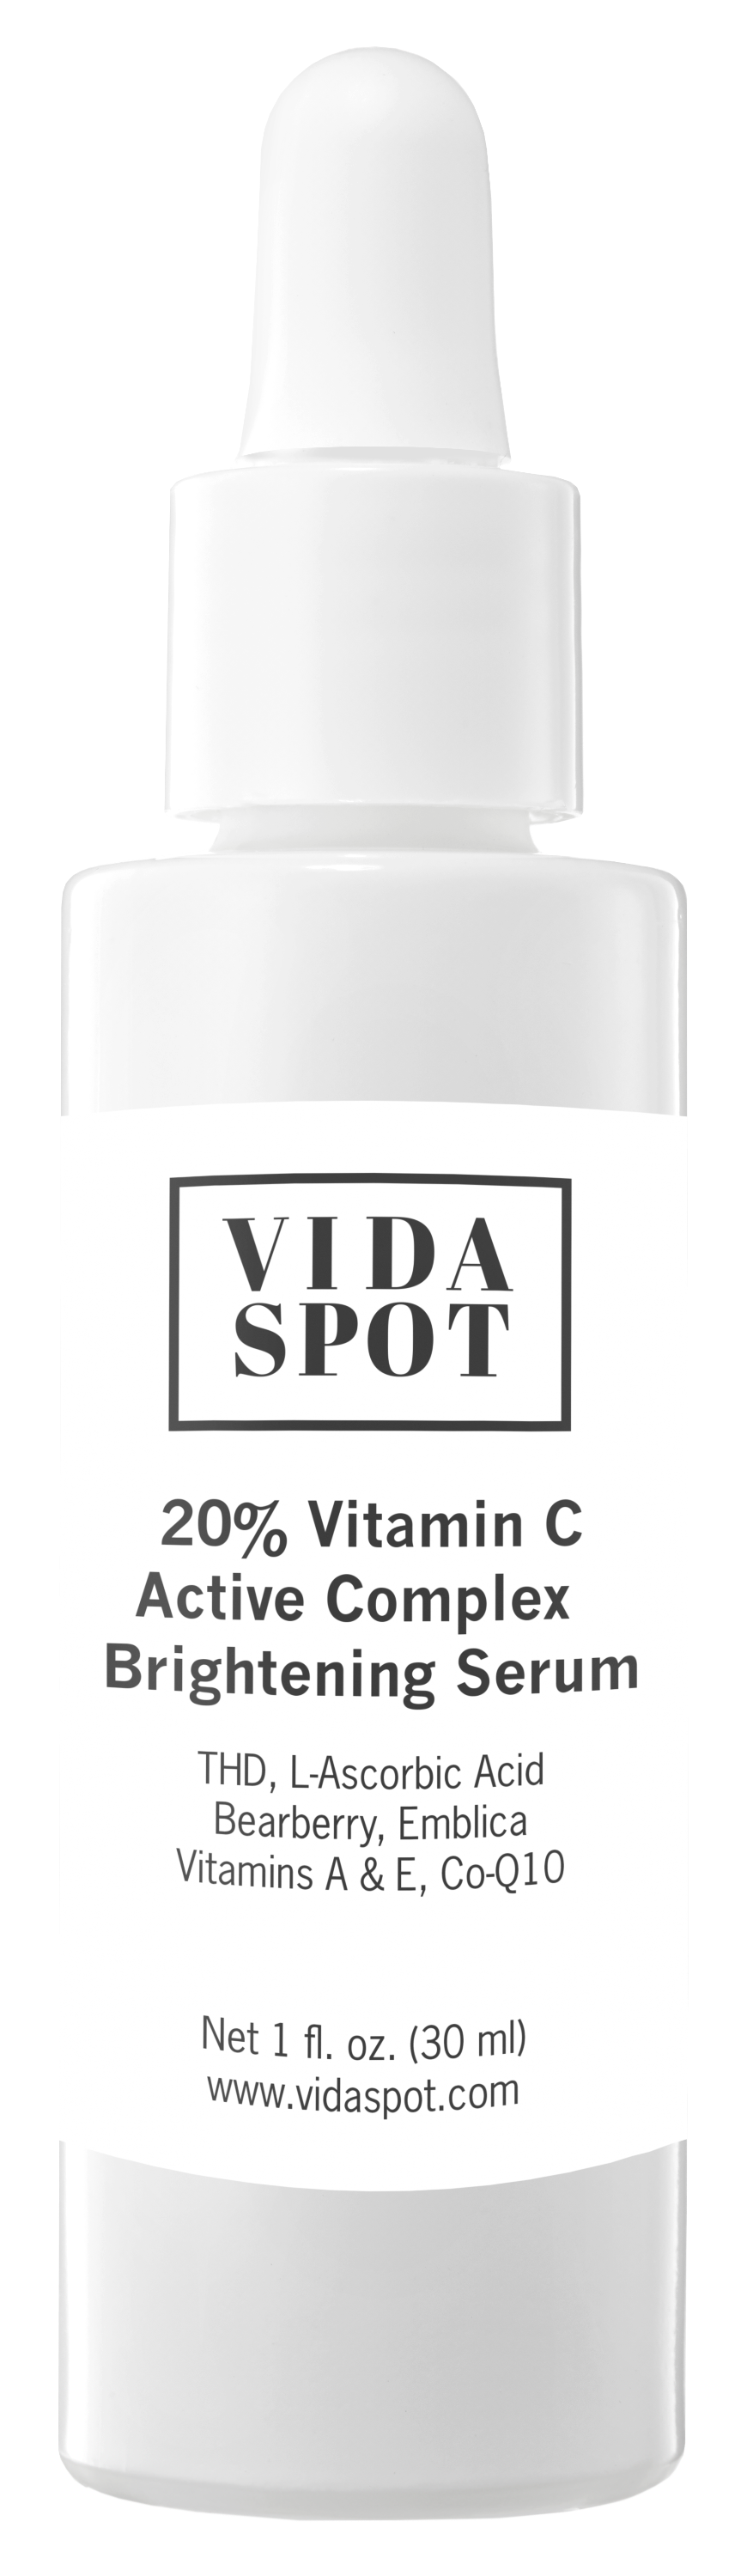 20% Vitamin C Brightening Serum 1fl oz (30mL)